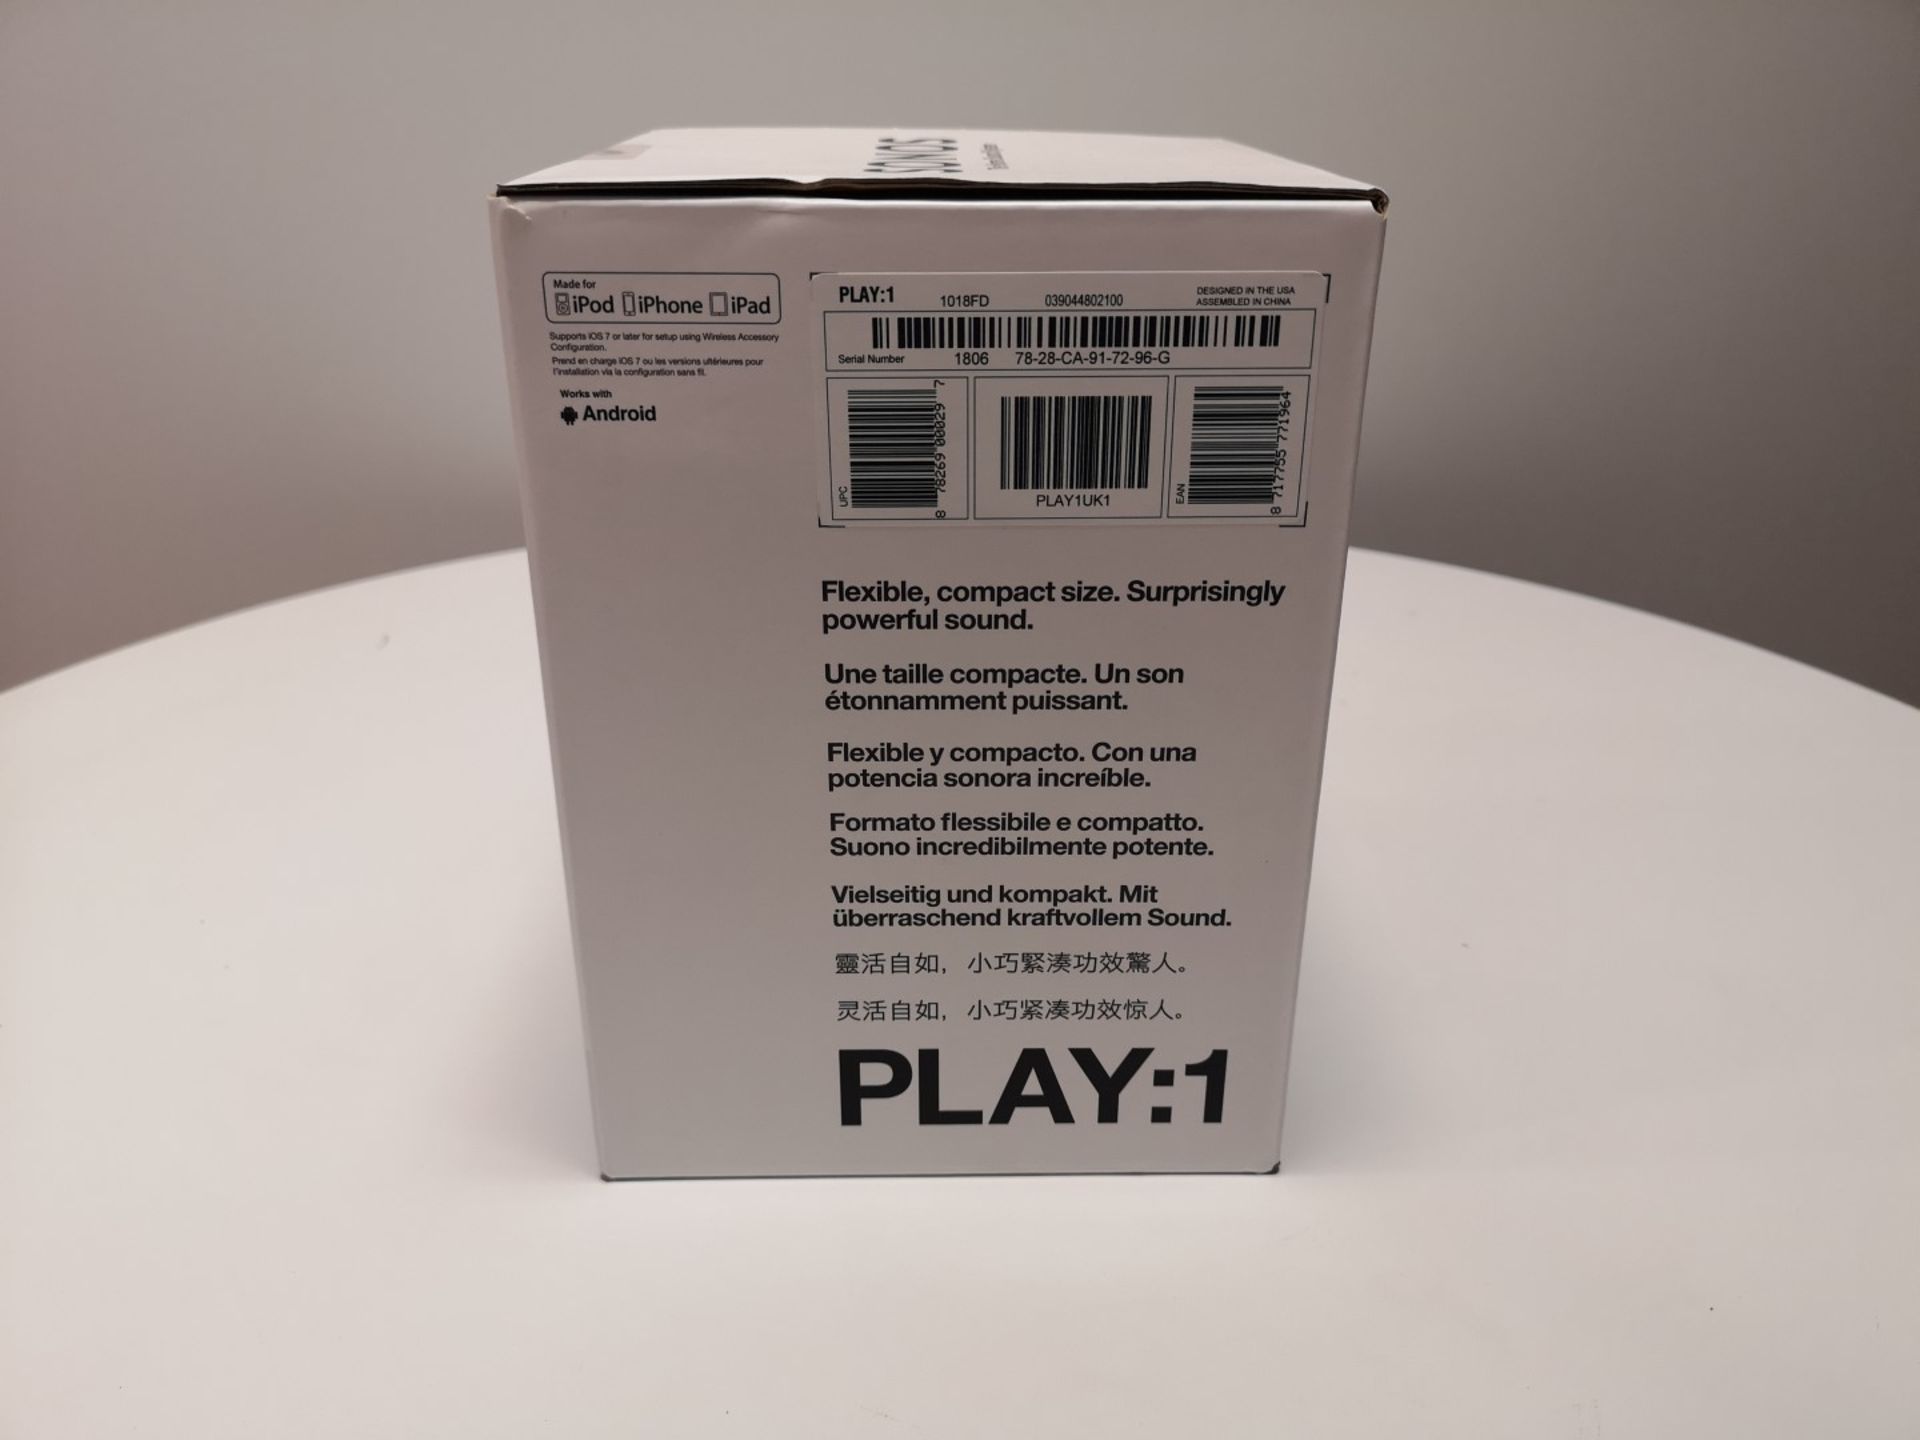 Sonos Play:1 Bluetooth Speaker - Image 3 of 4